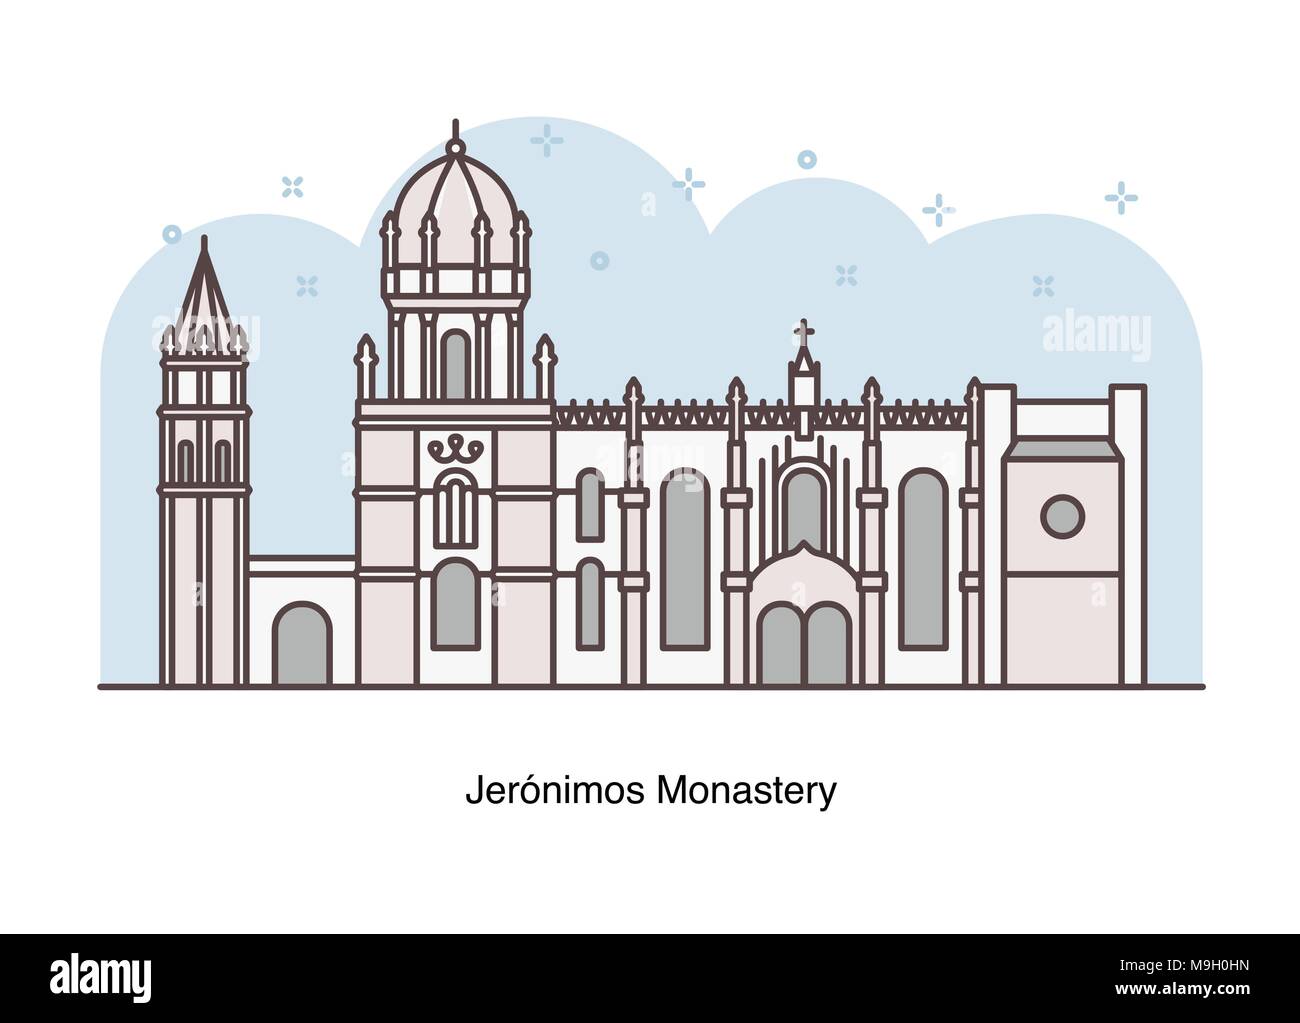 Vector line illustration of Jerónimos Monastery, Lisbon, Portugal. Stock Vector